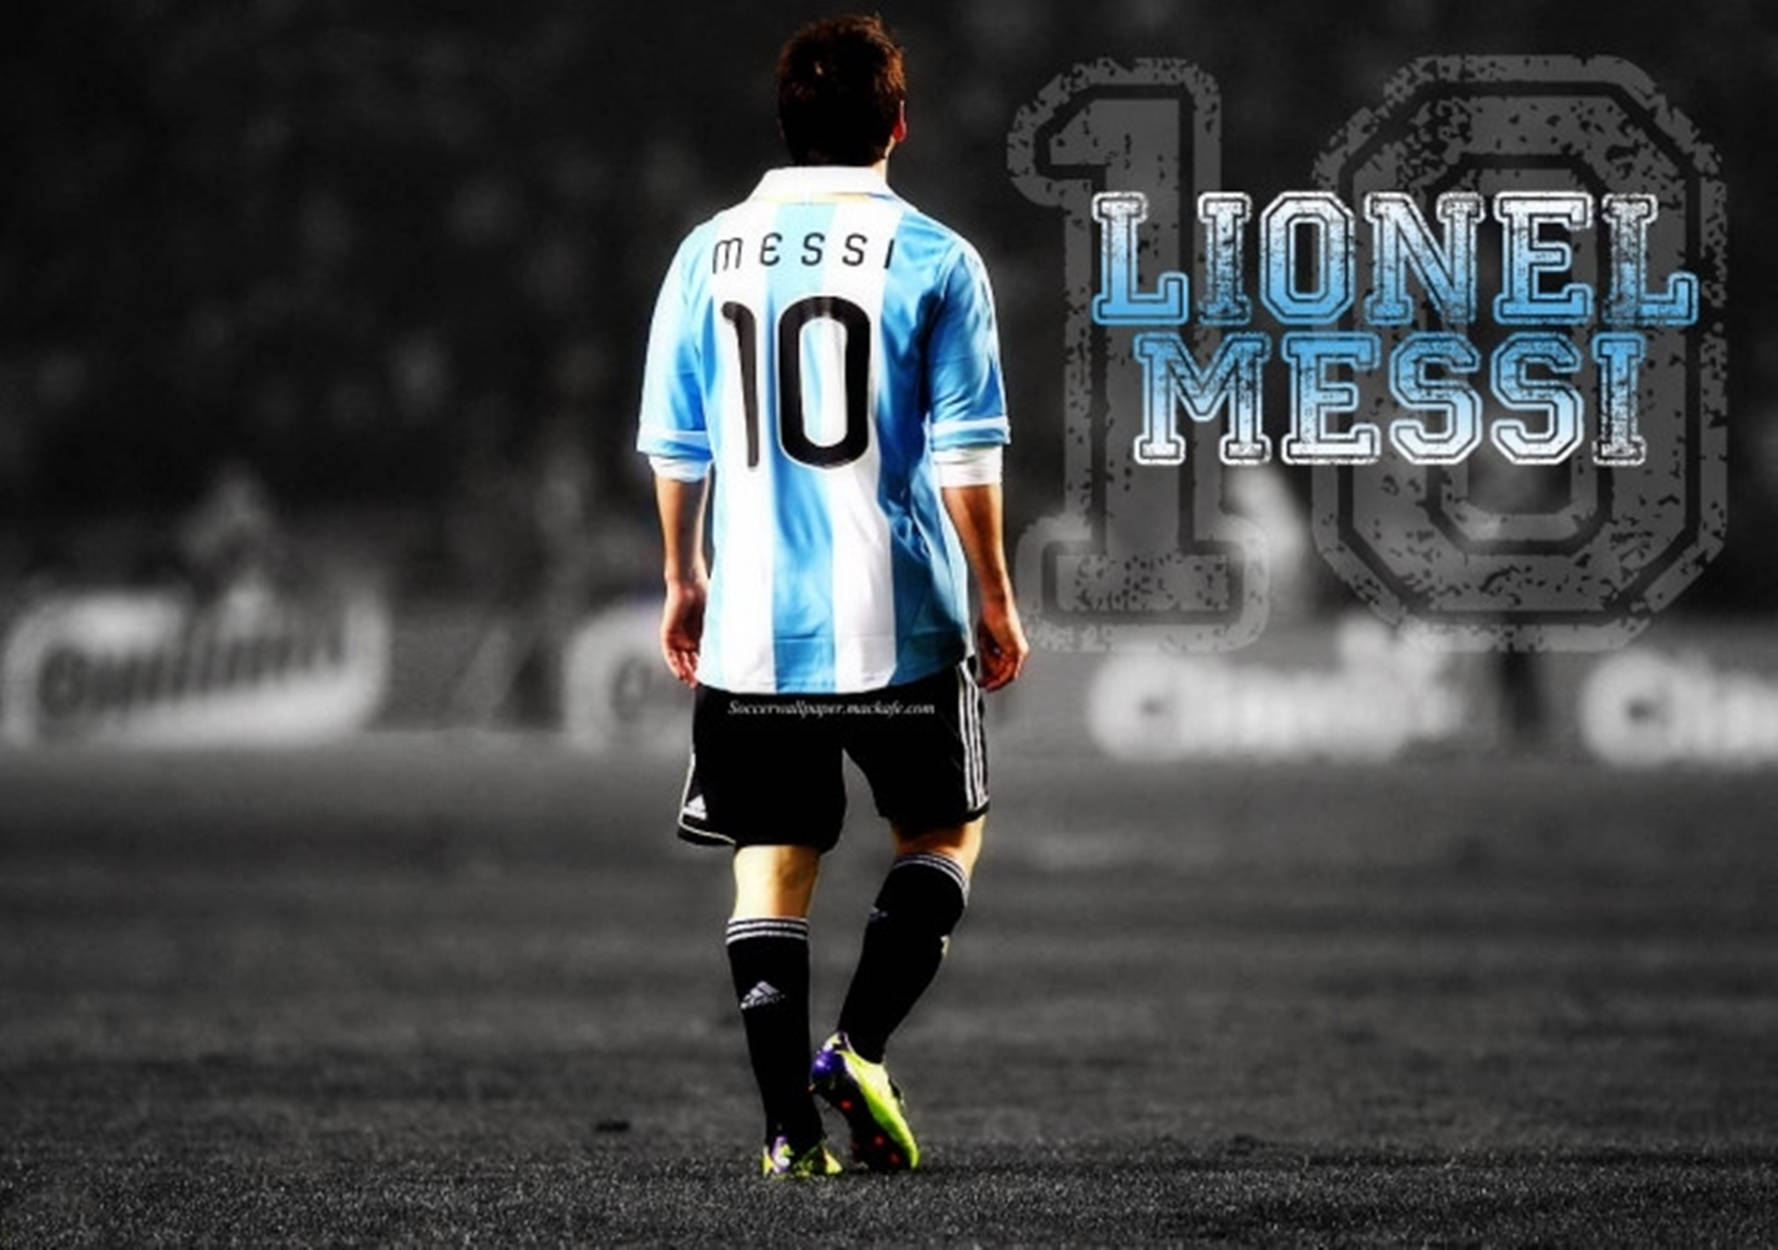 Focus Messi Argentina Football Poster Wallpaper